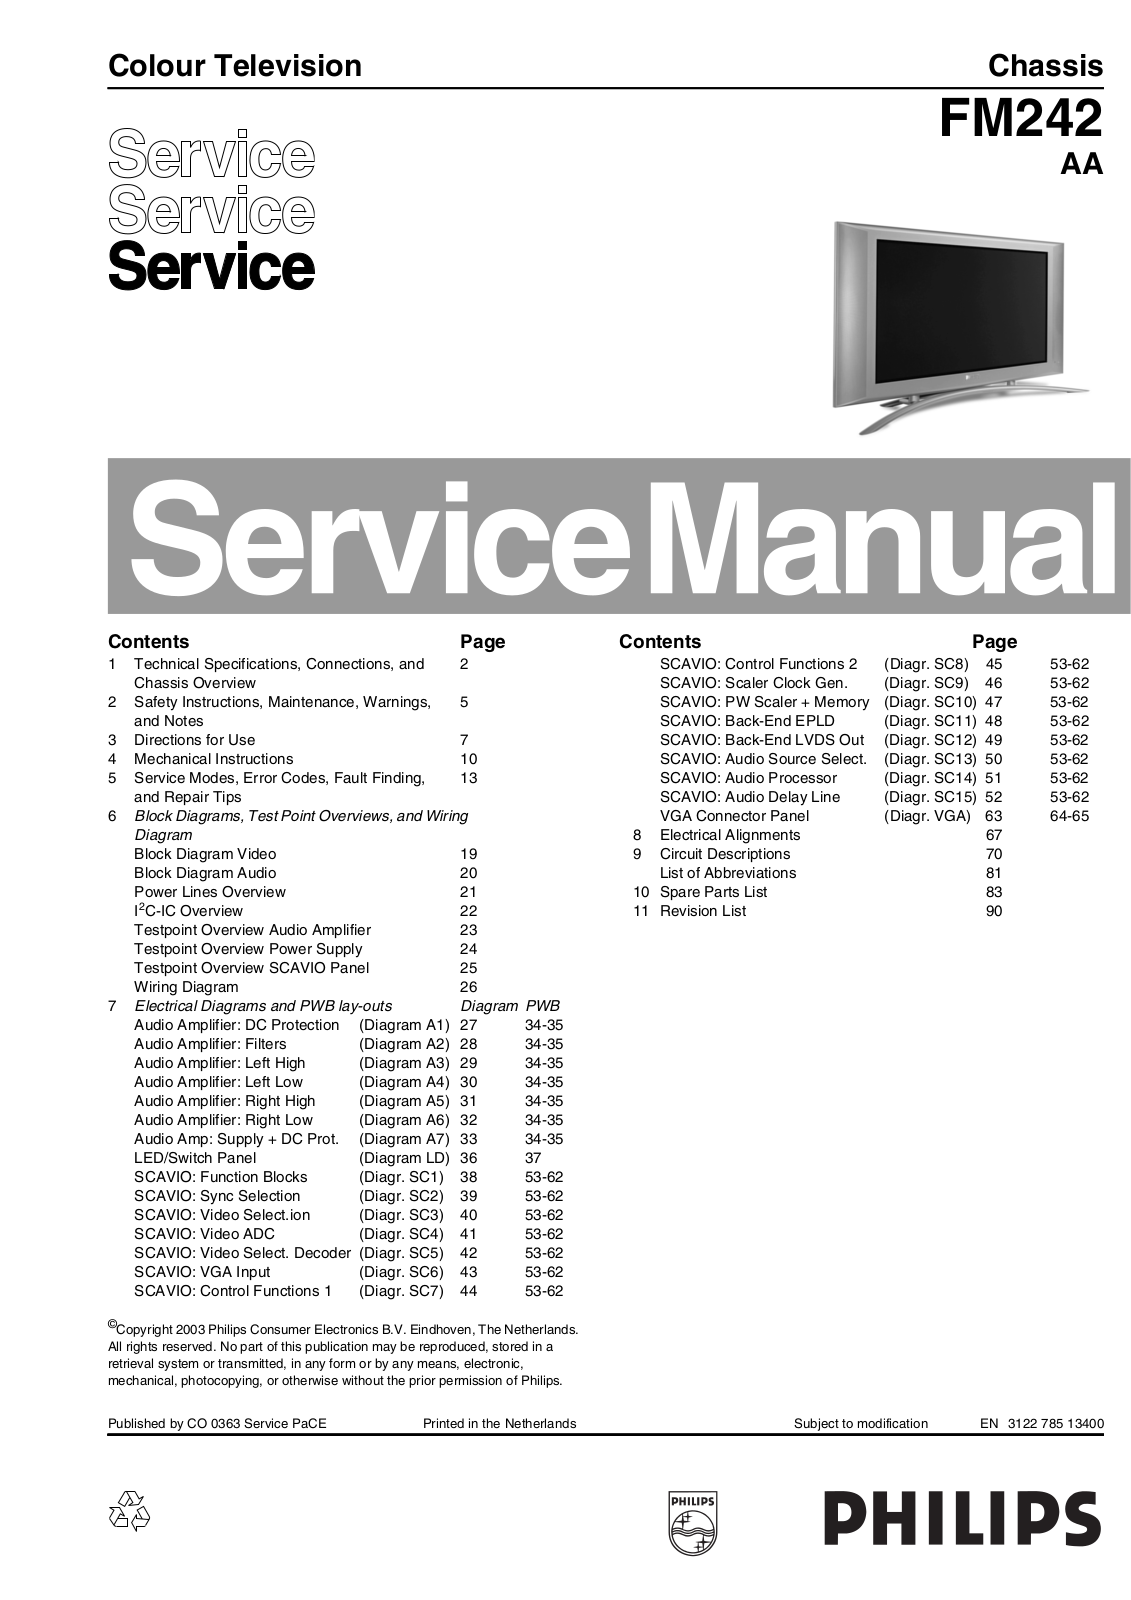 Philips FM242 AA Service Manual